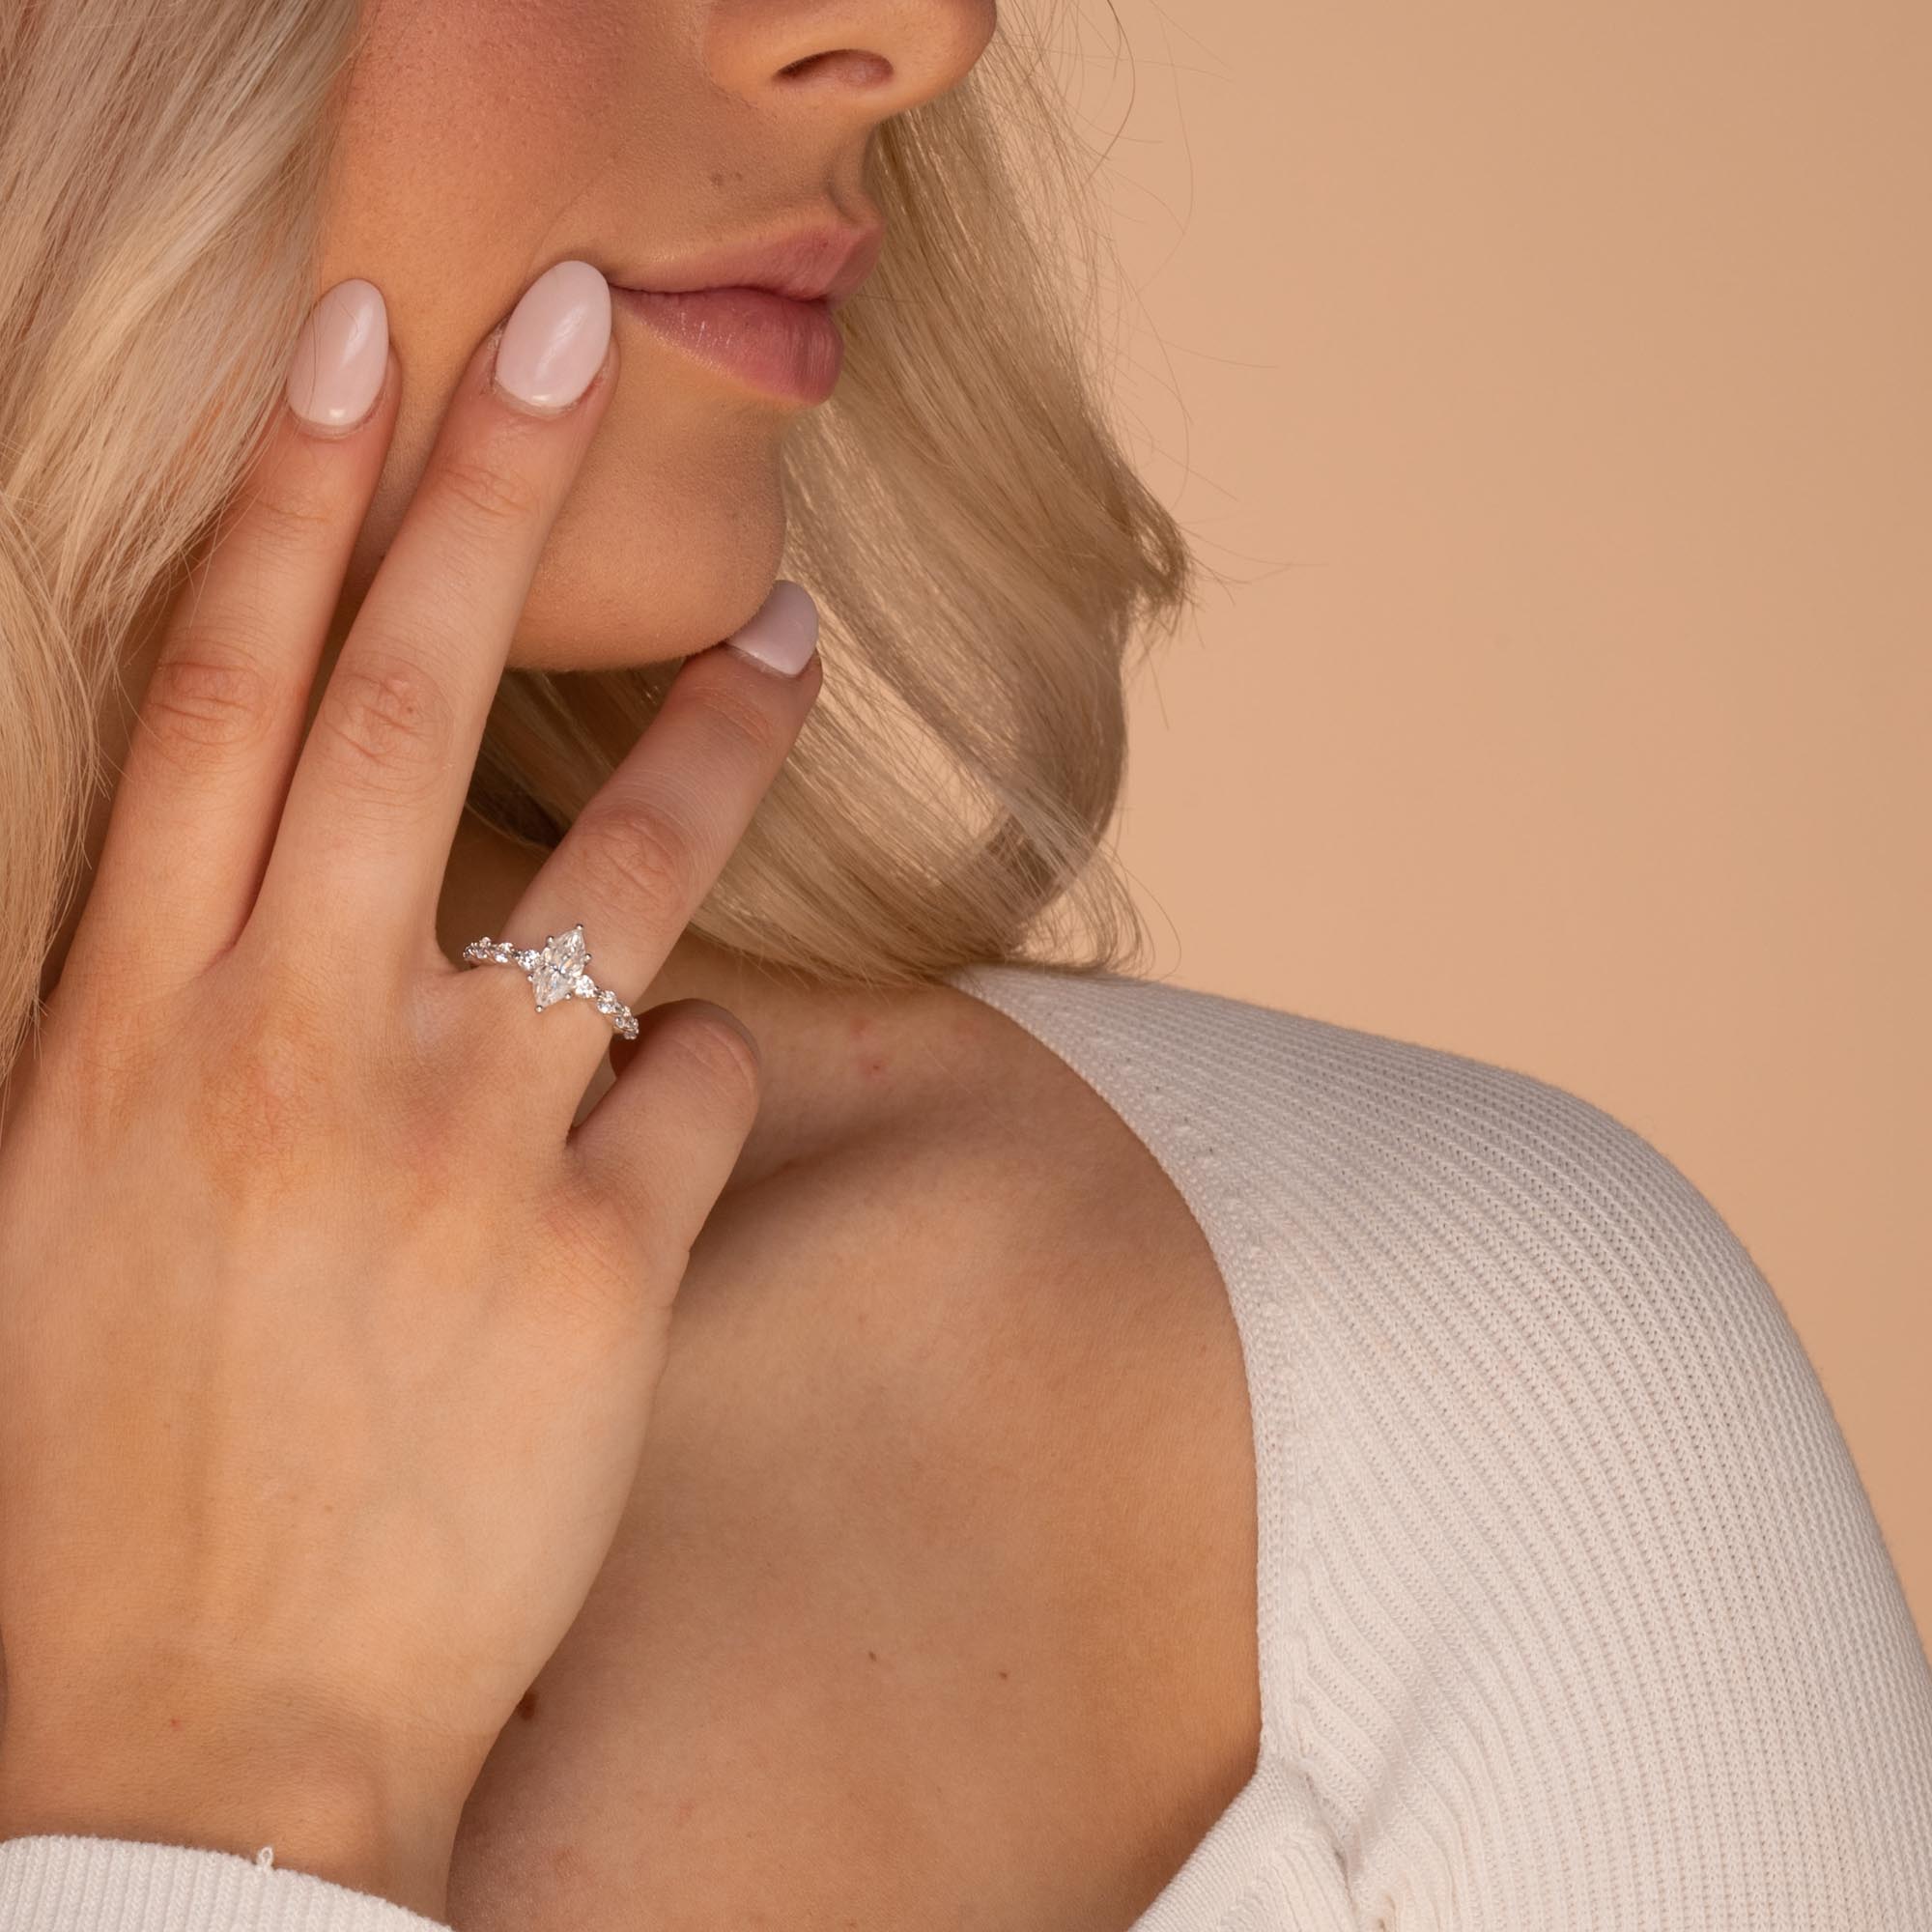 1 ct The Elizabeth Moissanite Diamond Engagement Ring